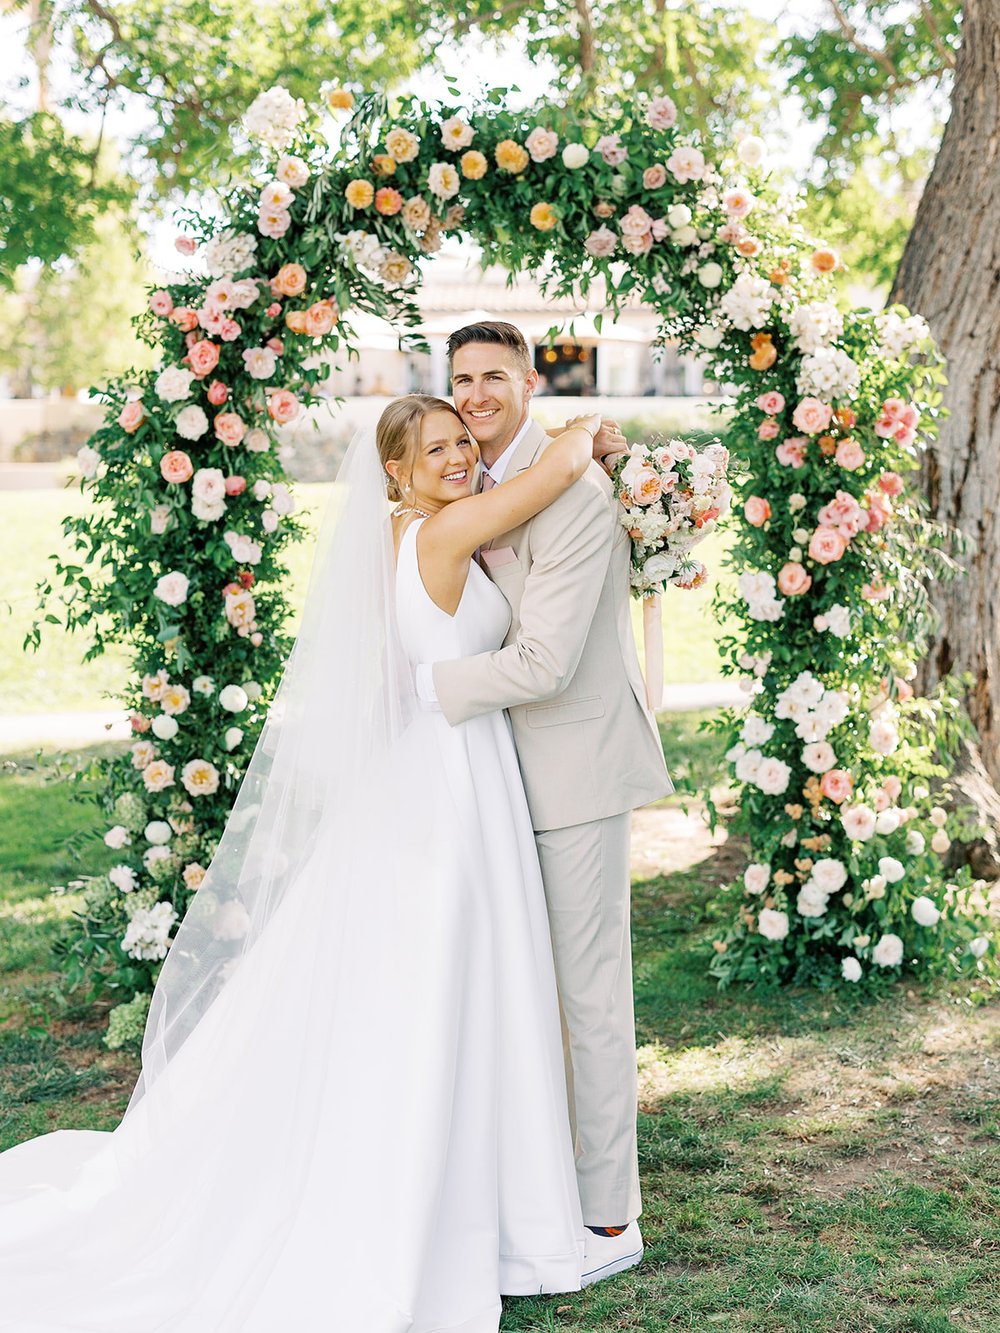 colorful wedding arch flowers.jpg